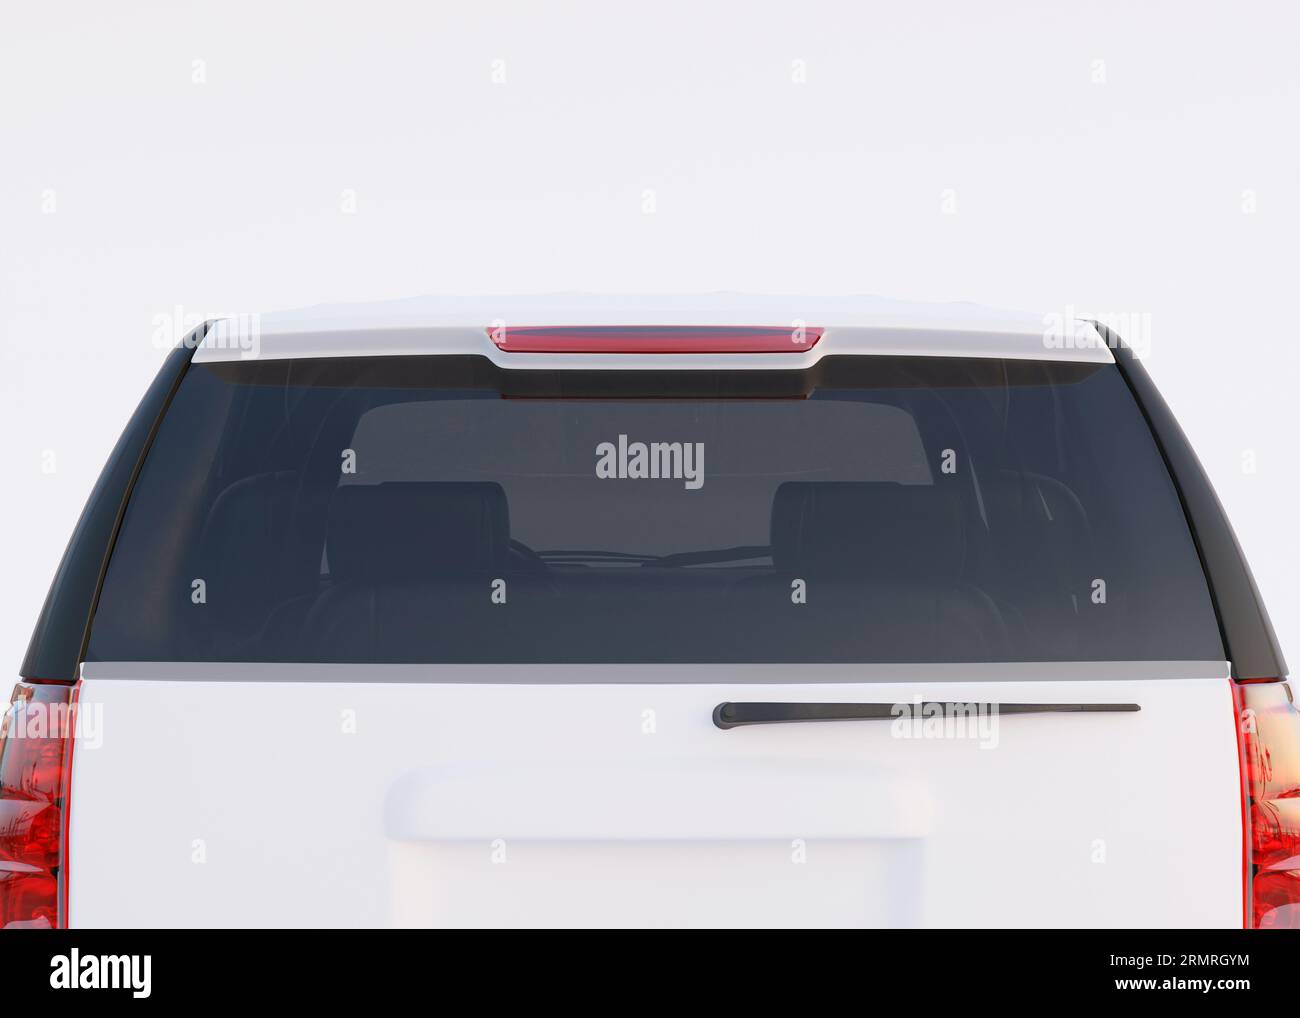 Blank Car Rear Window B-RW-1, Bundle of 8 JPG Scenes and 4 PNG Cars,  Sticker & Decal Display Scenes, Dark and Light Cars 